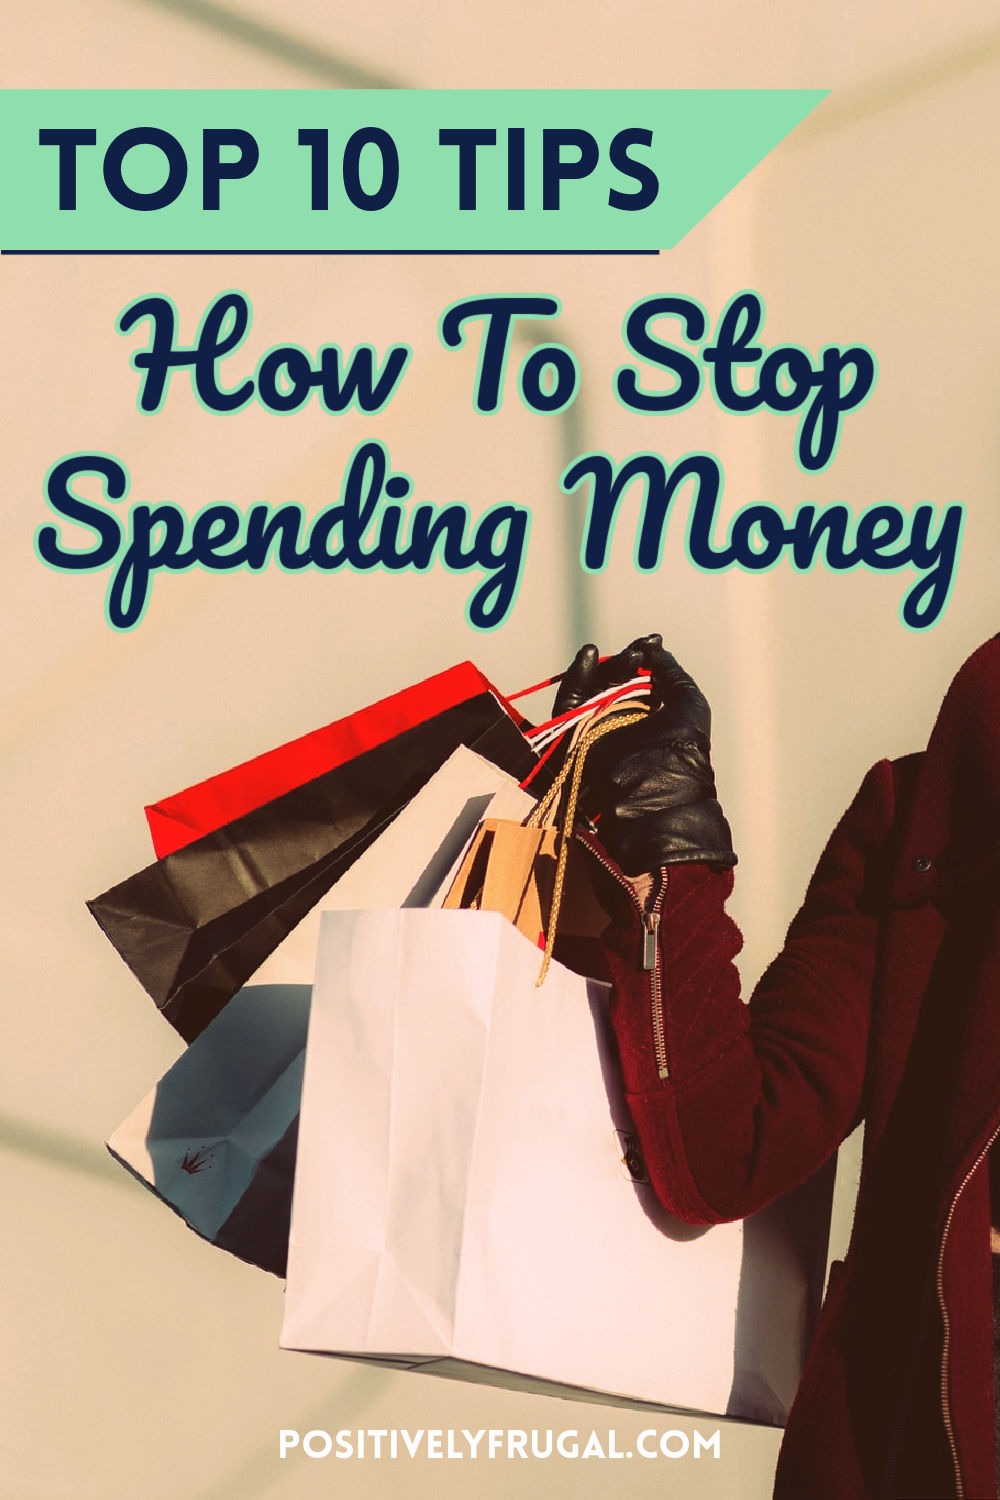 Top Ten Tips How To Stop Spending Money by PositivelyFrugal.com